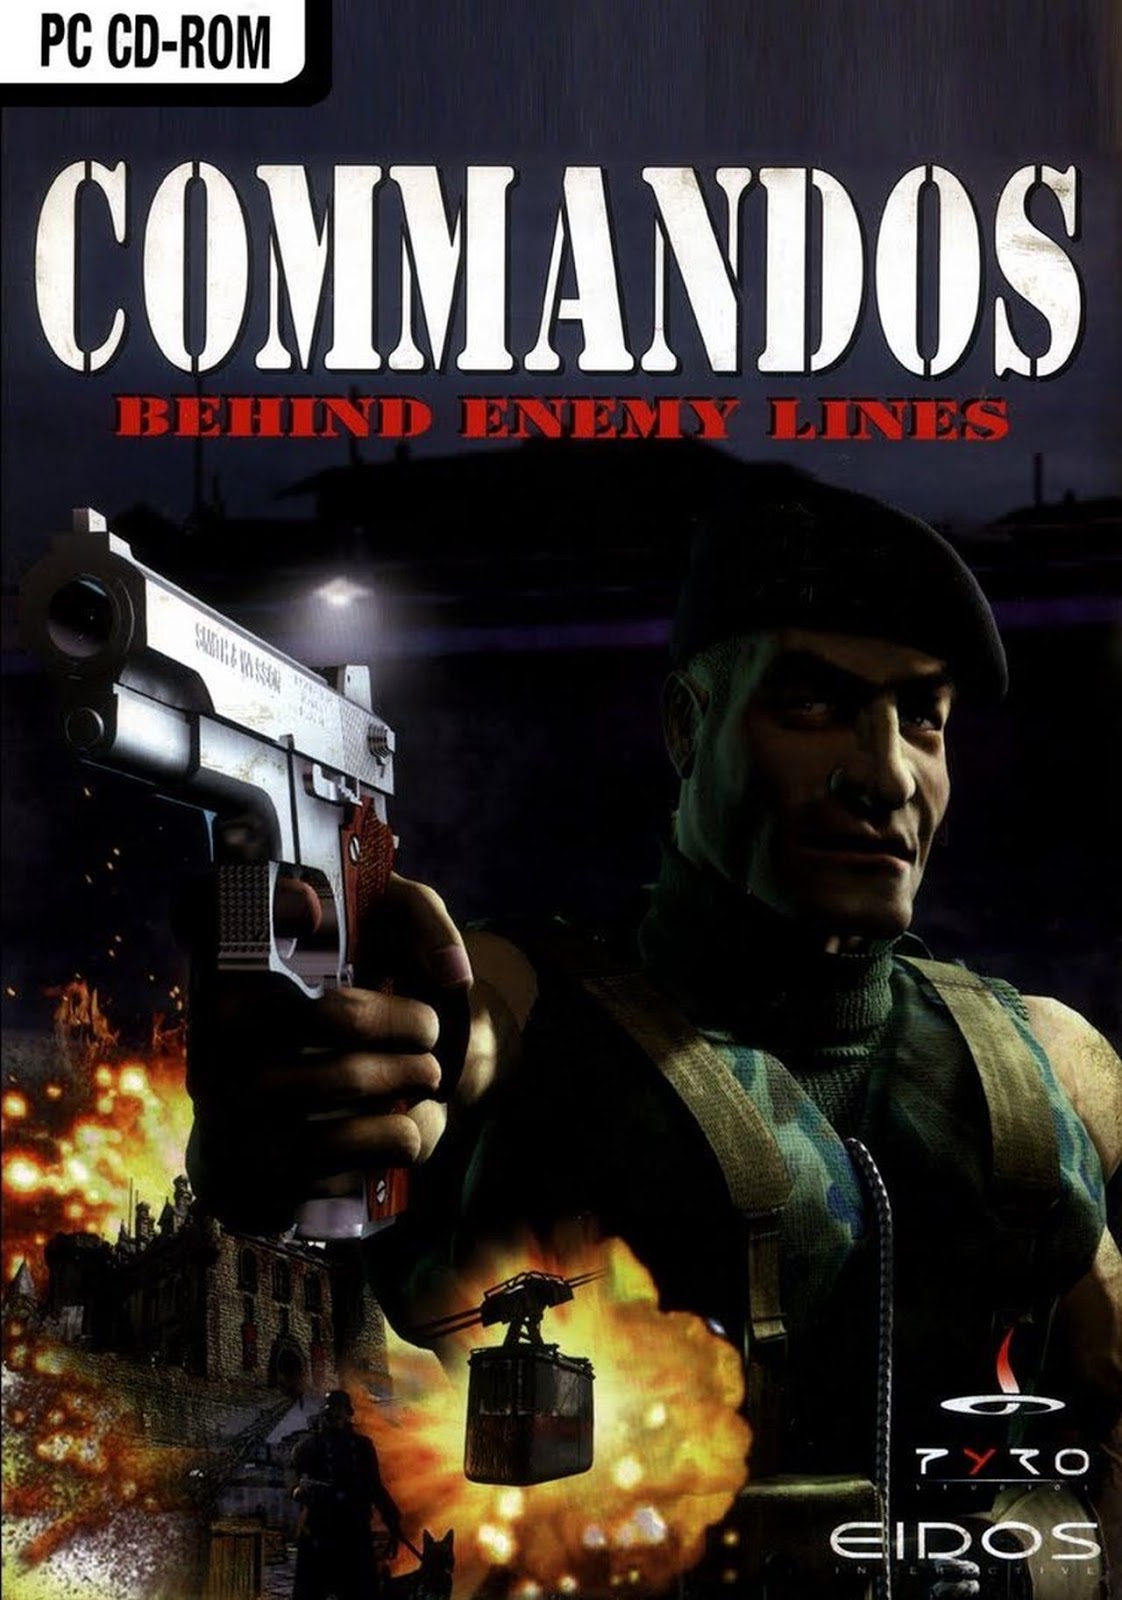 Download Game Commando 2 Full Version Crack